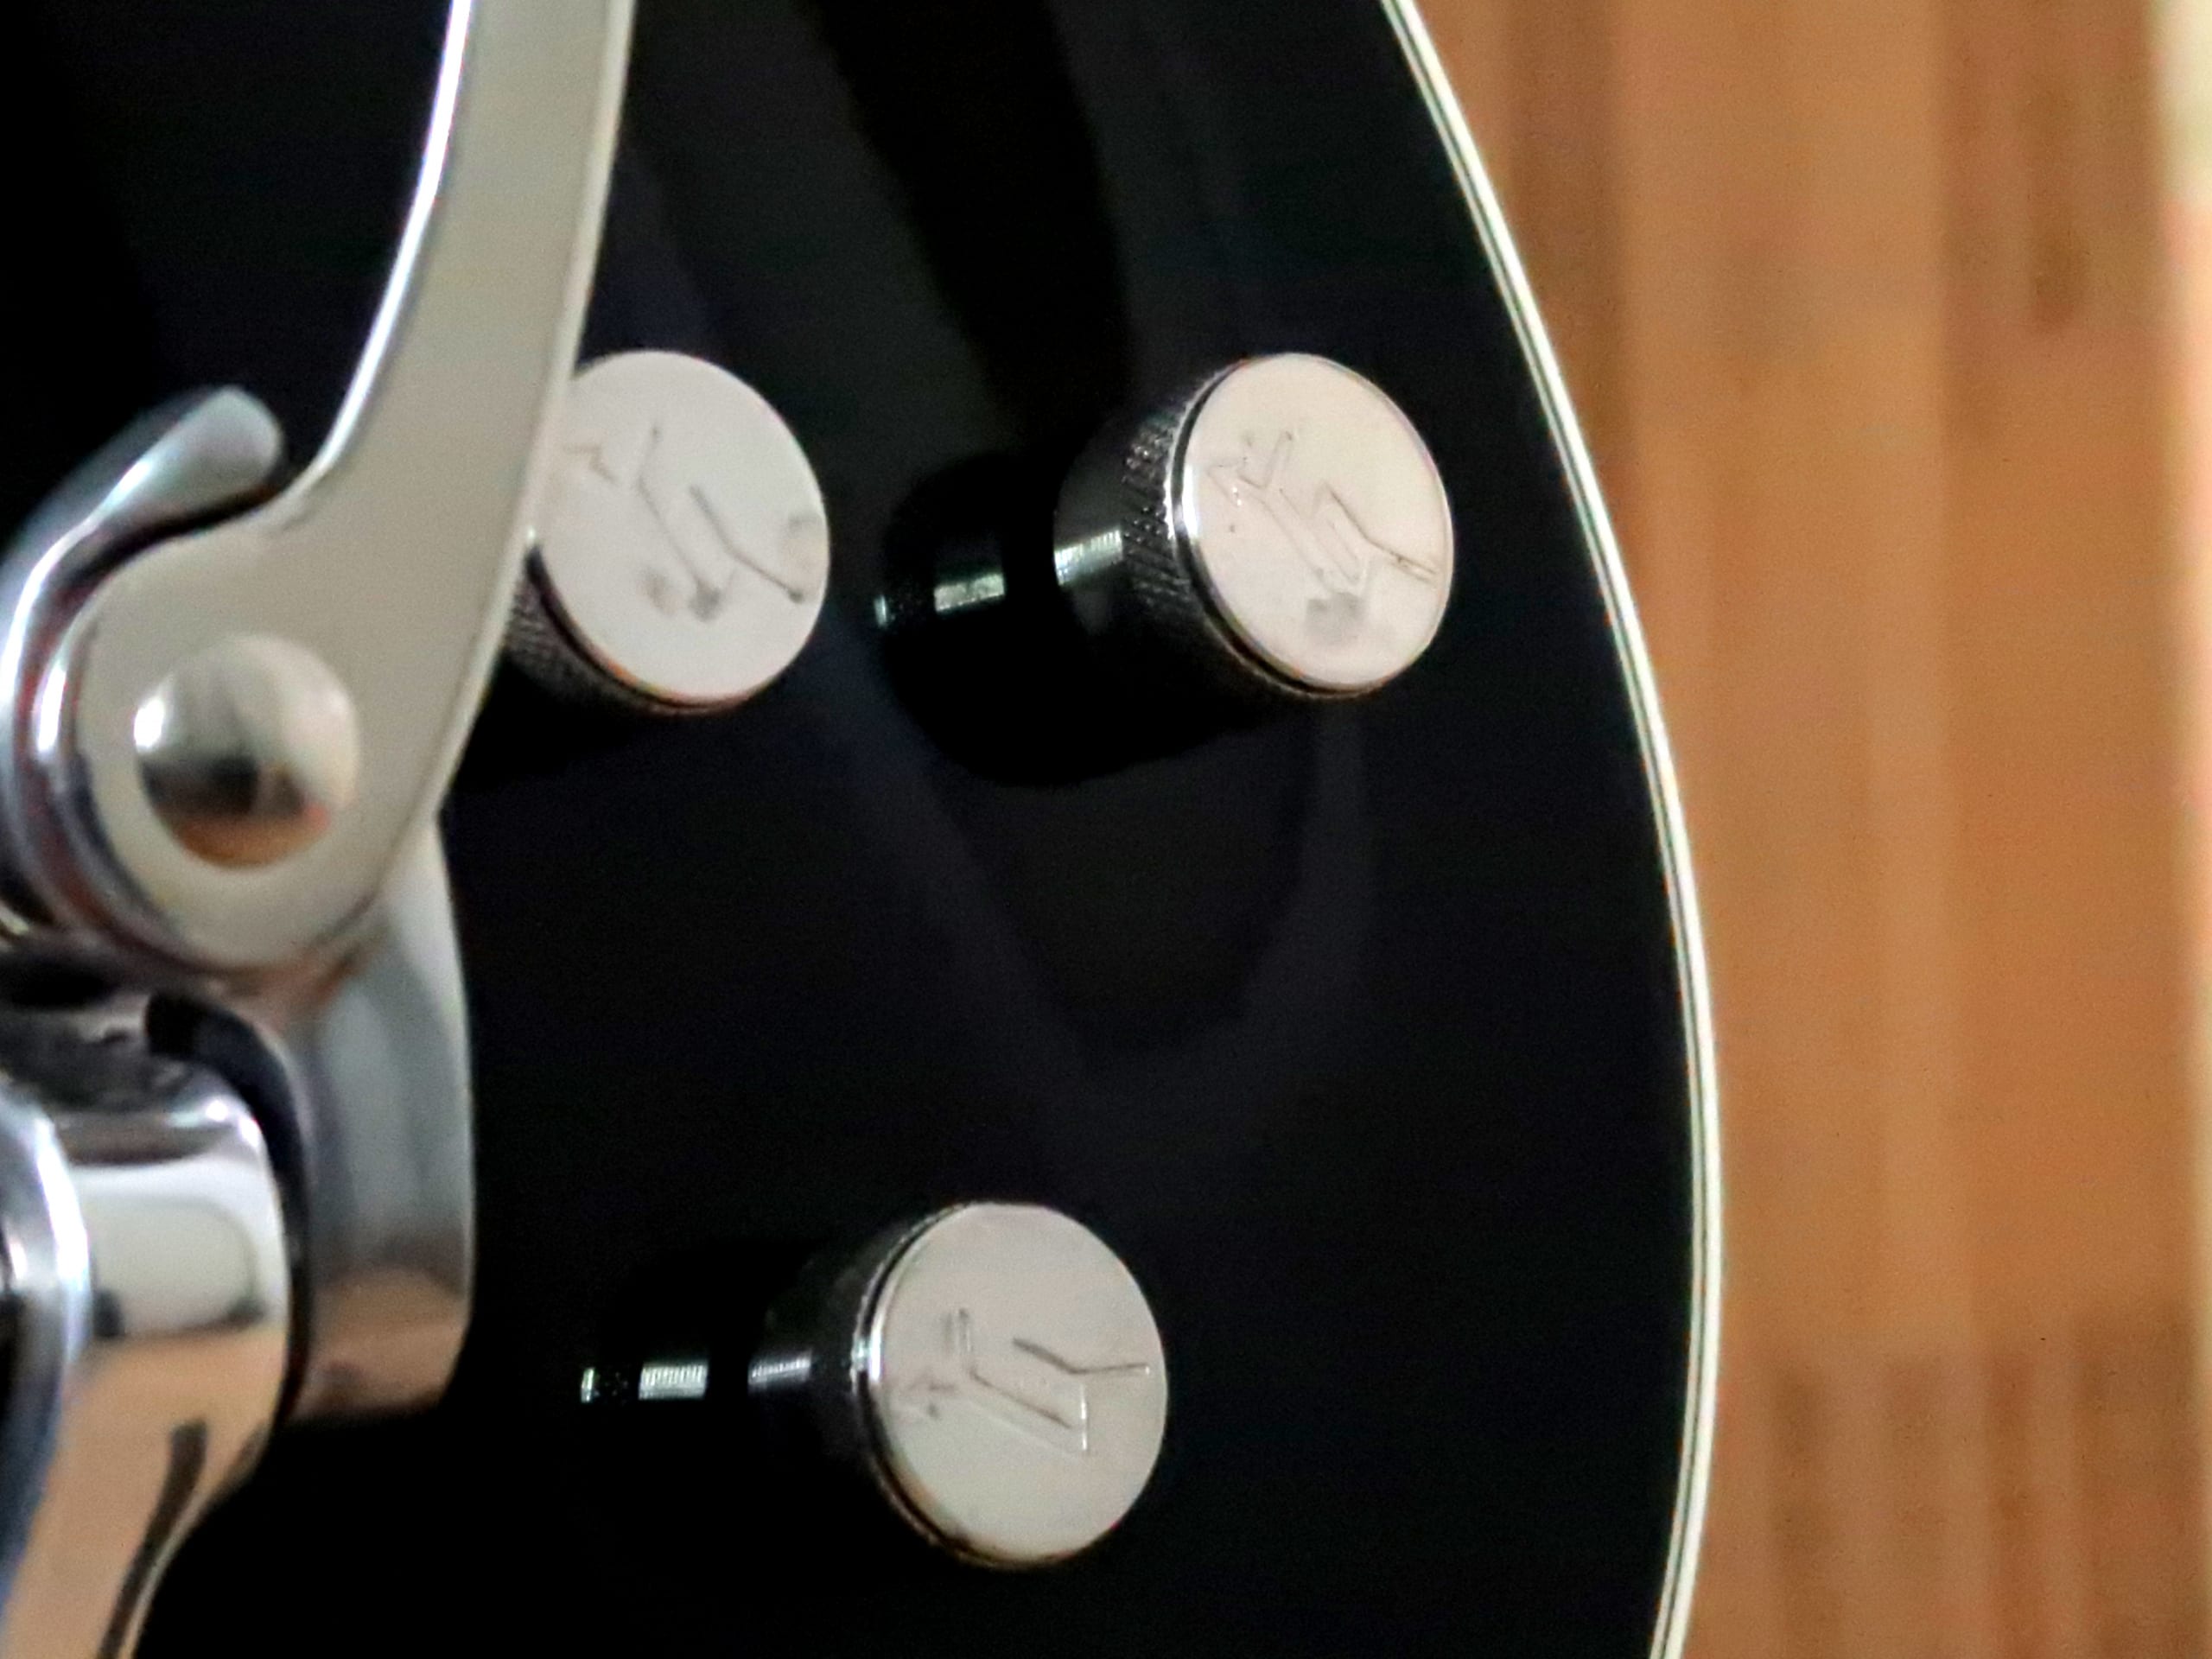 Gretsch 6128T electric guitar closeup control knobs